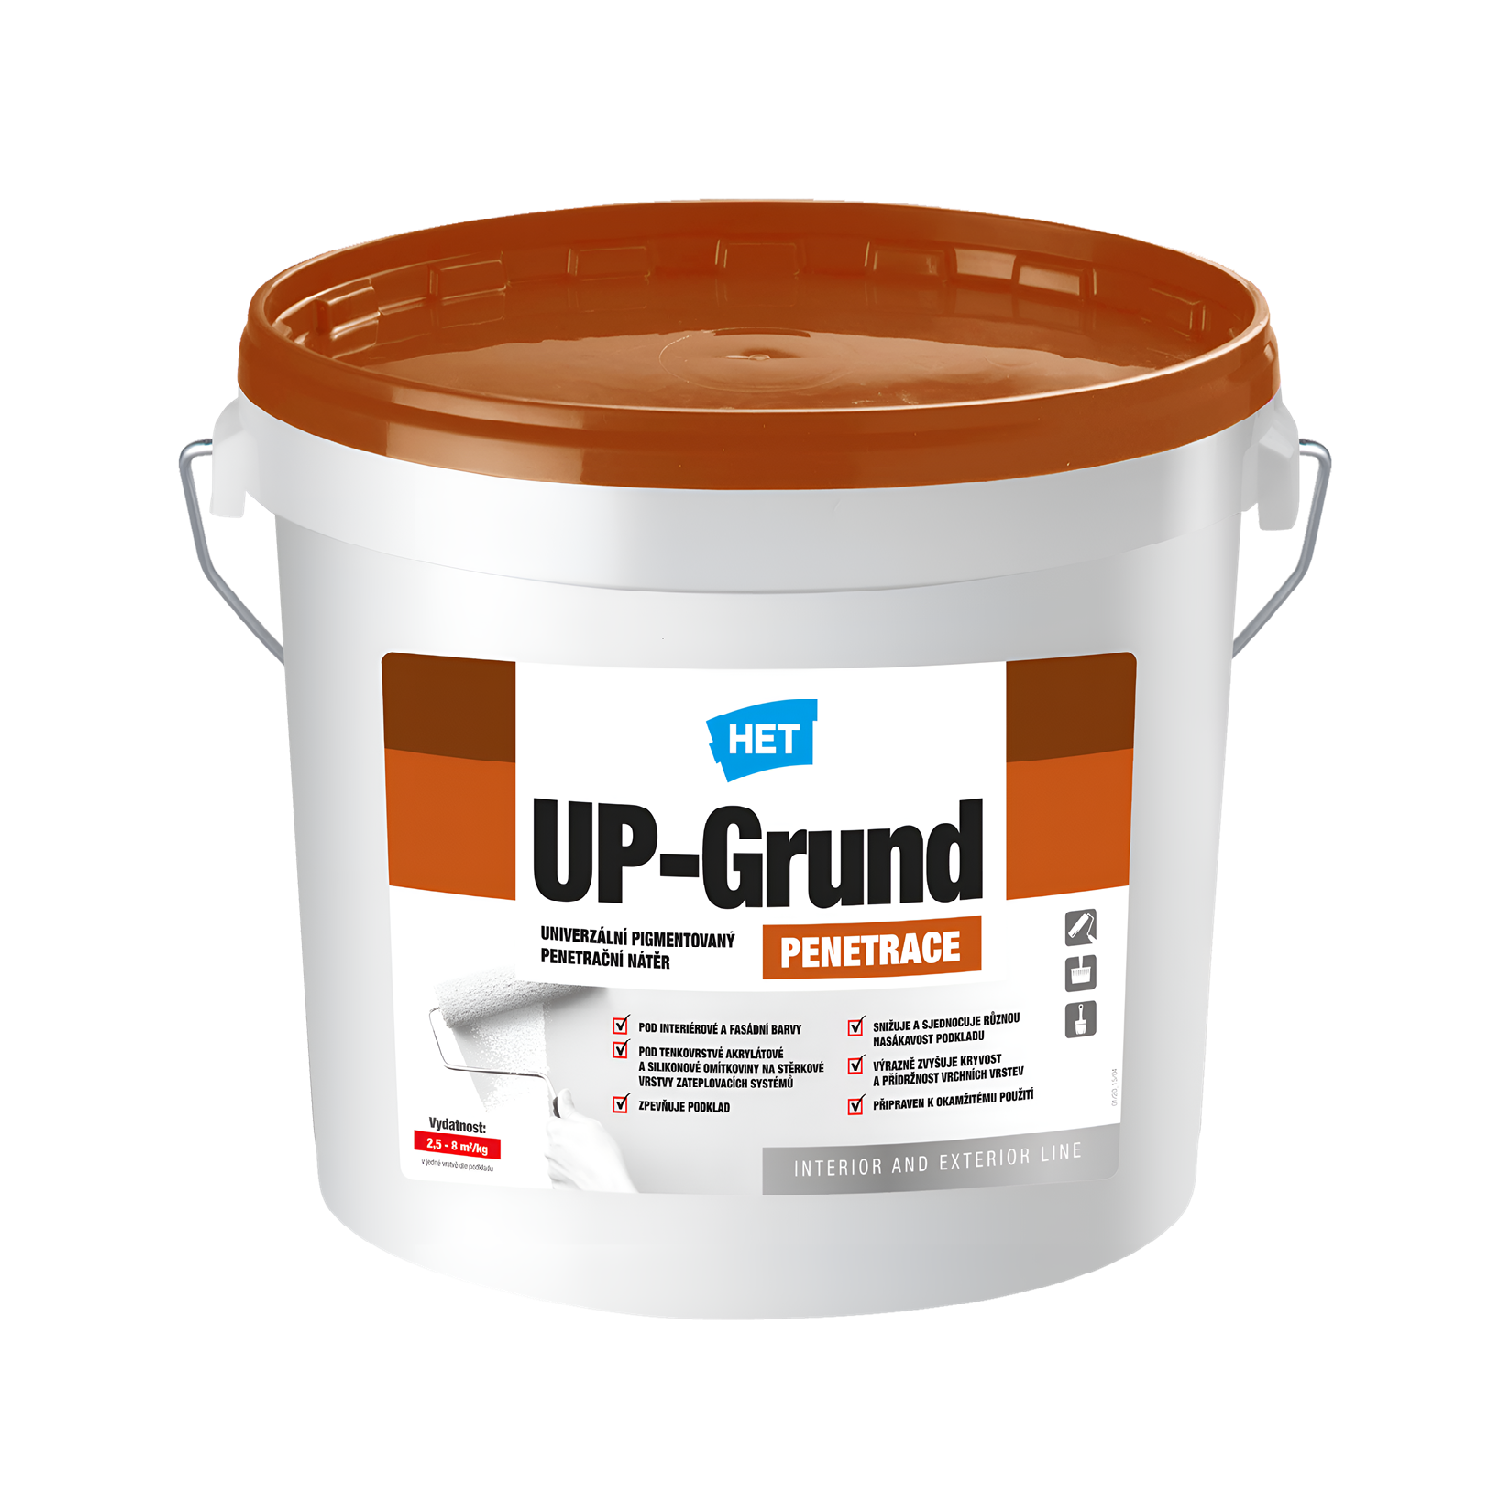 HET UP-Grund univerzálny pigmentovaný penetračný náter 5 kg